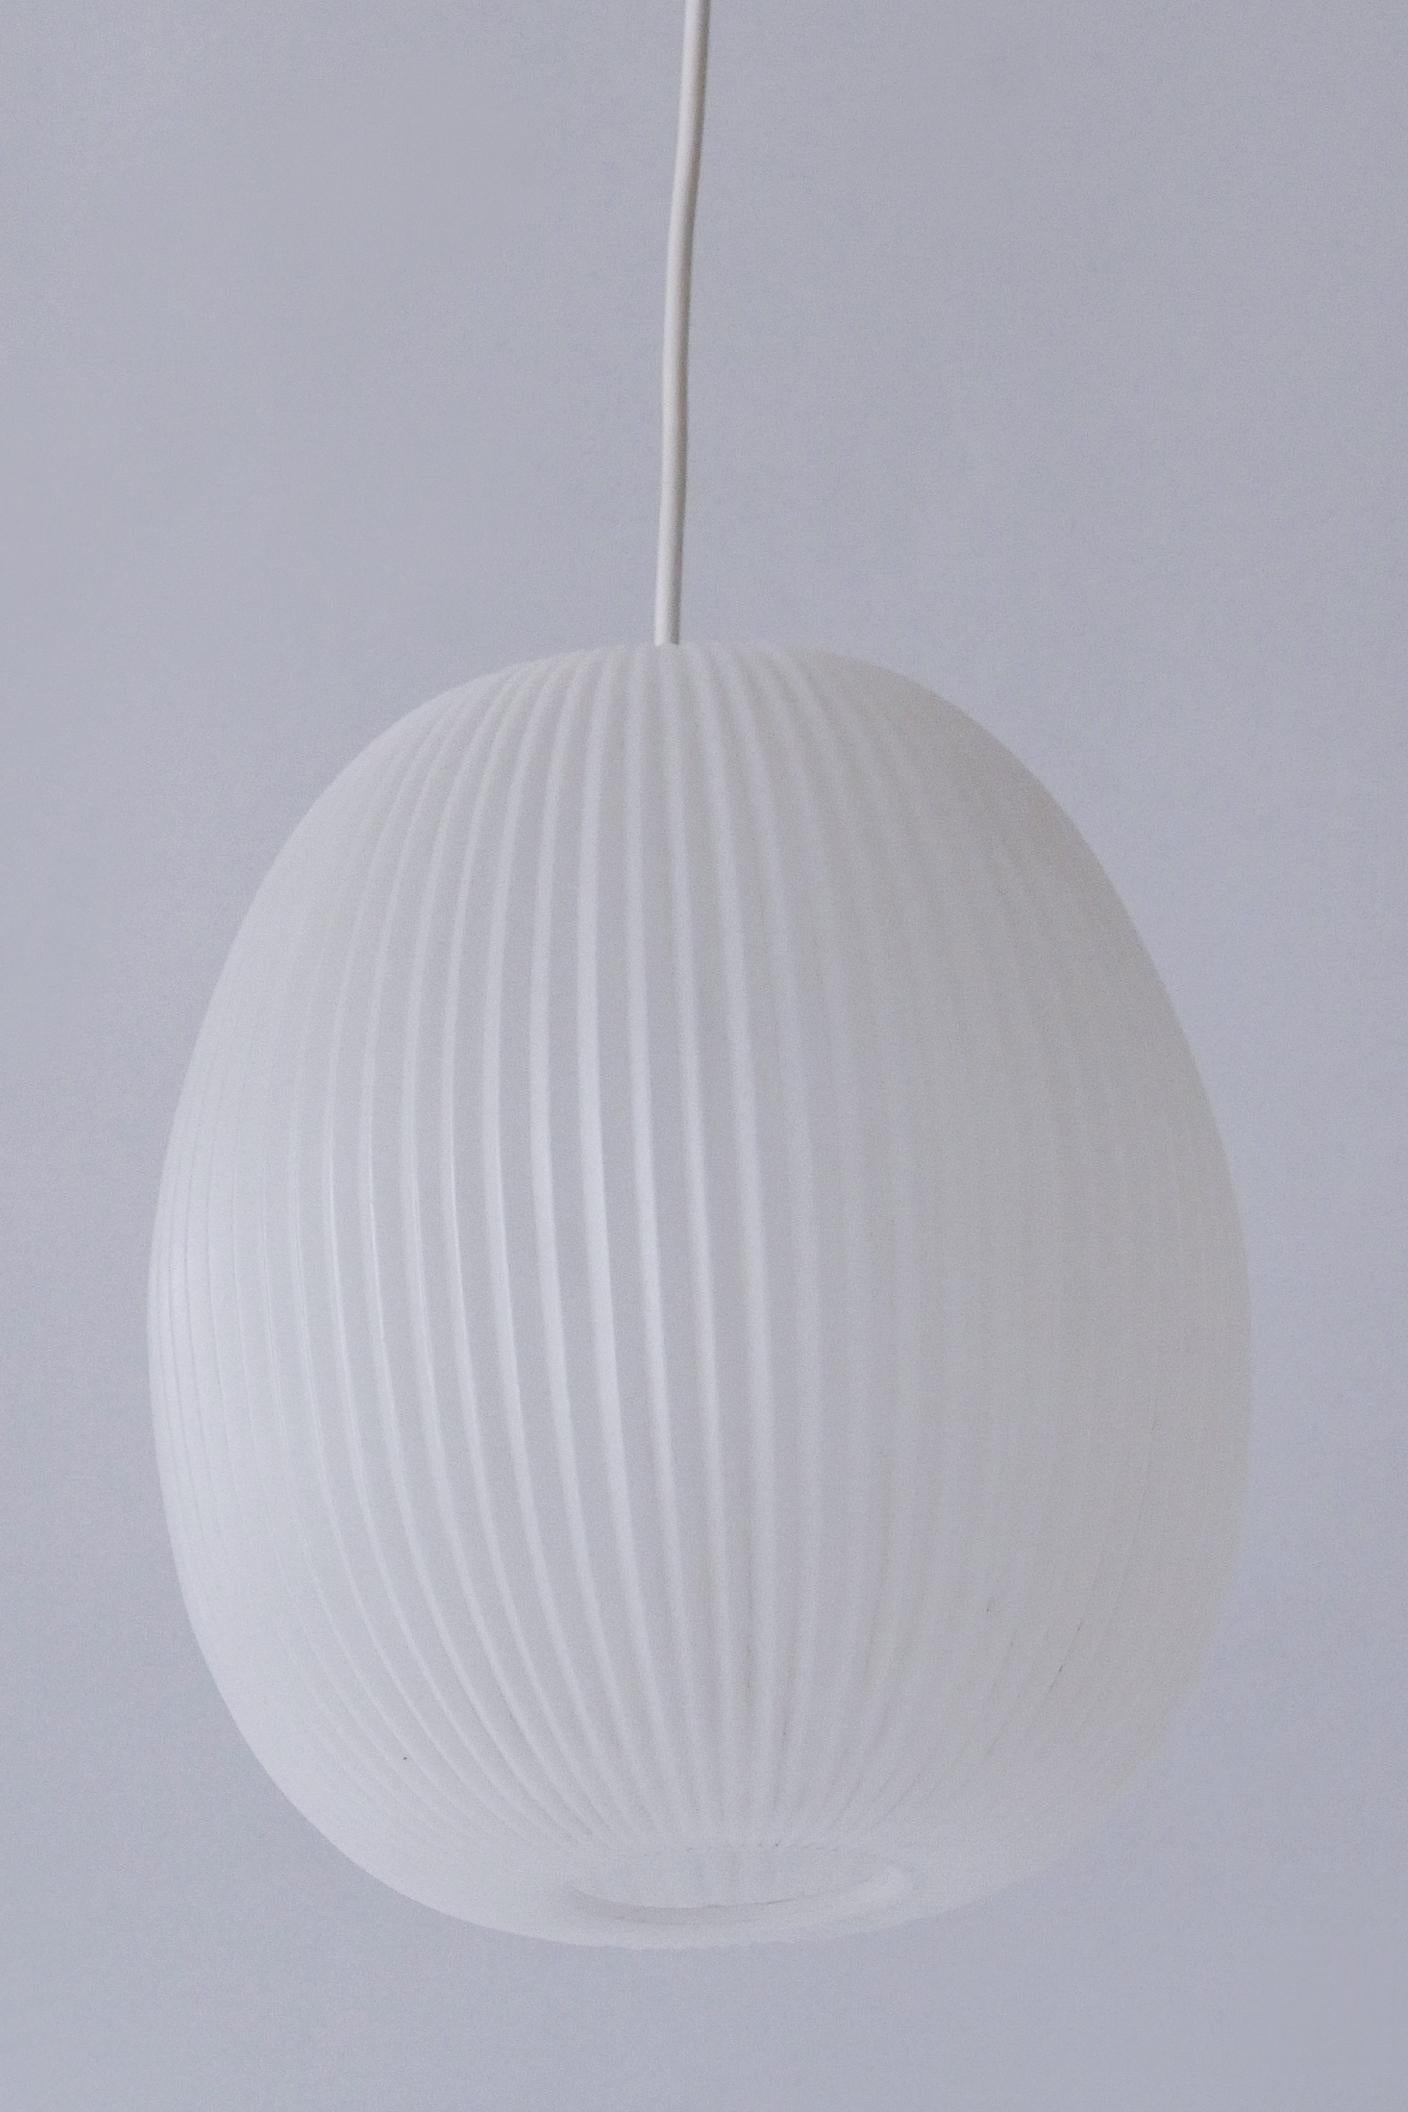 Lovely Mid-Century Modern Pendant Lamp by Aloys F. Gangkofner für Erco 1960s For Sale 6